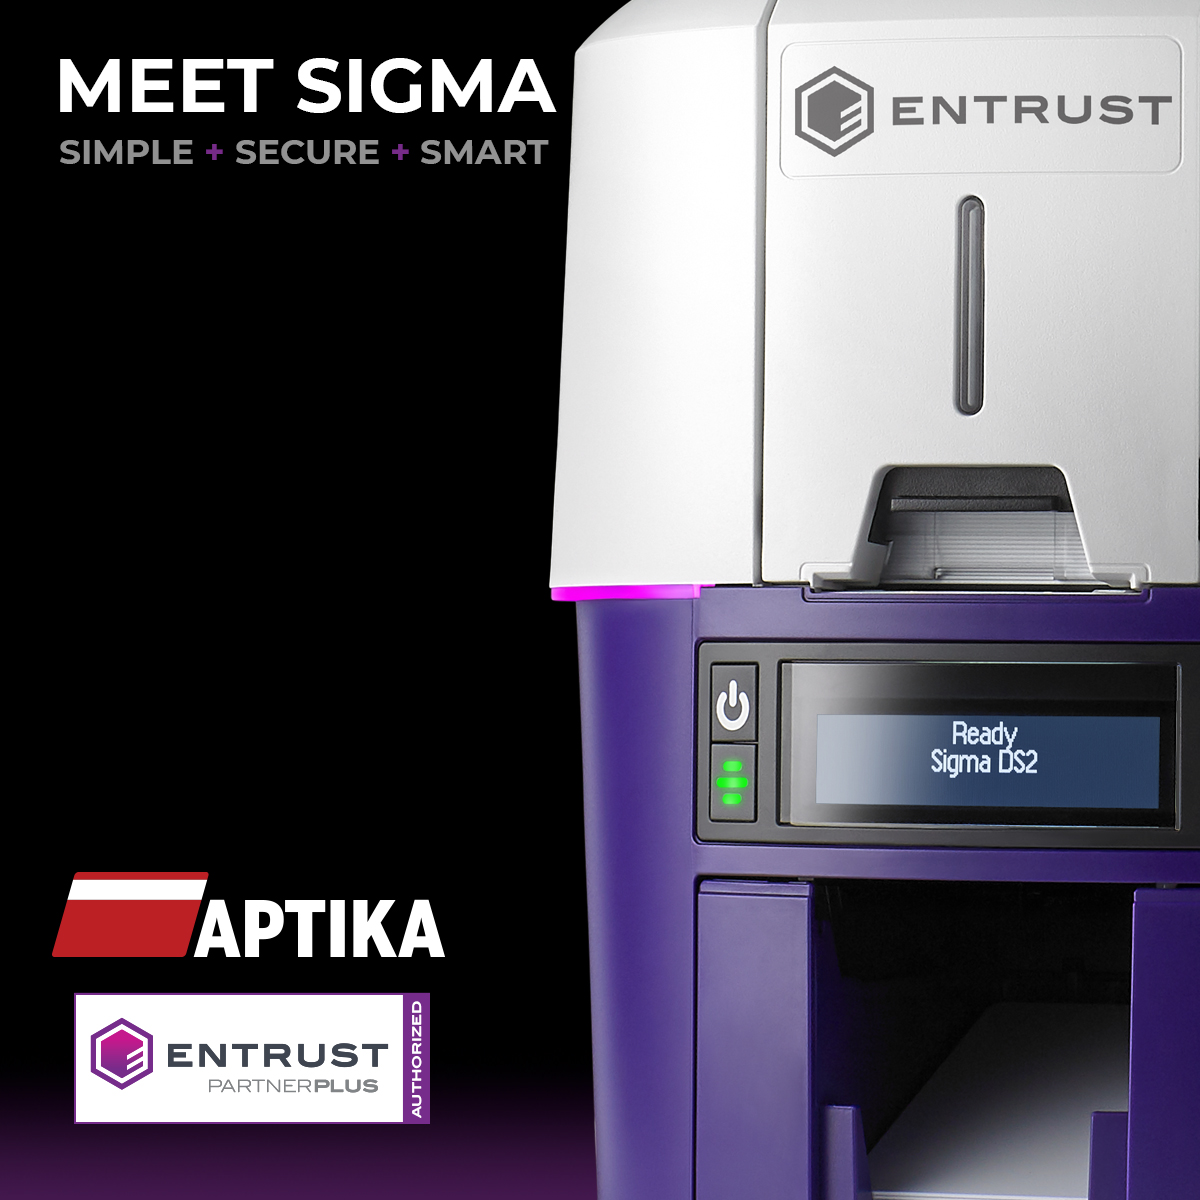 Aptika is now an Entrust Partner Plus